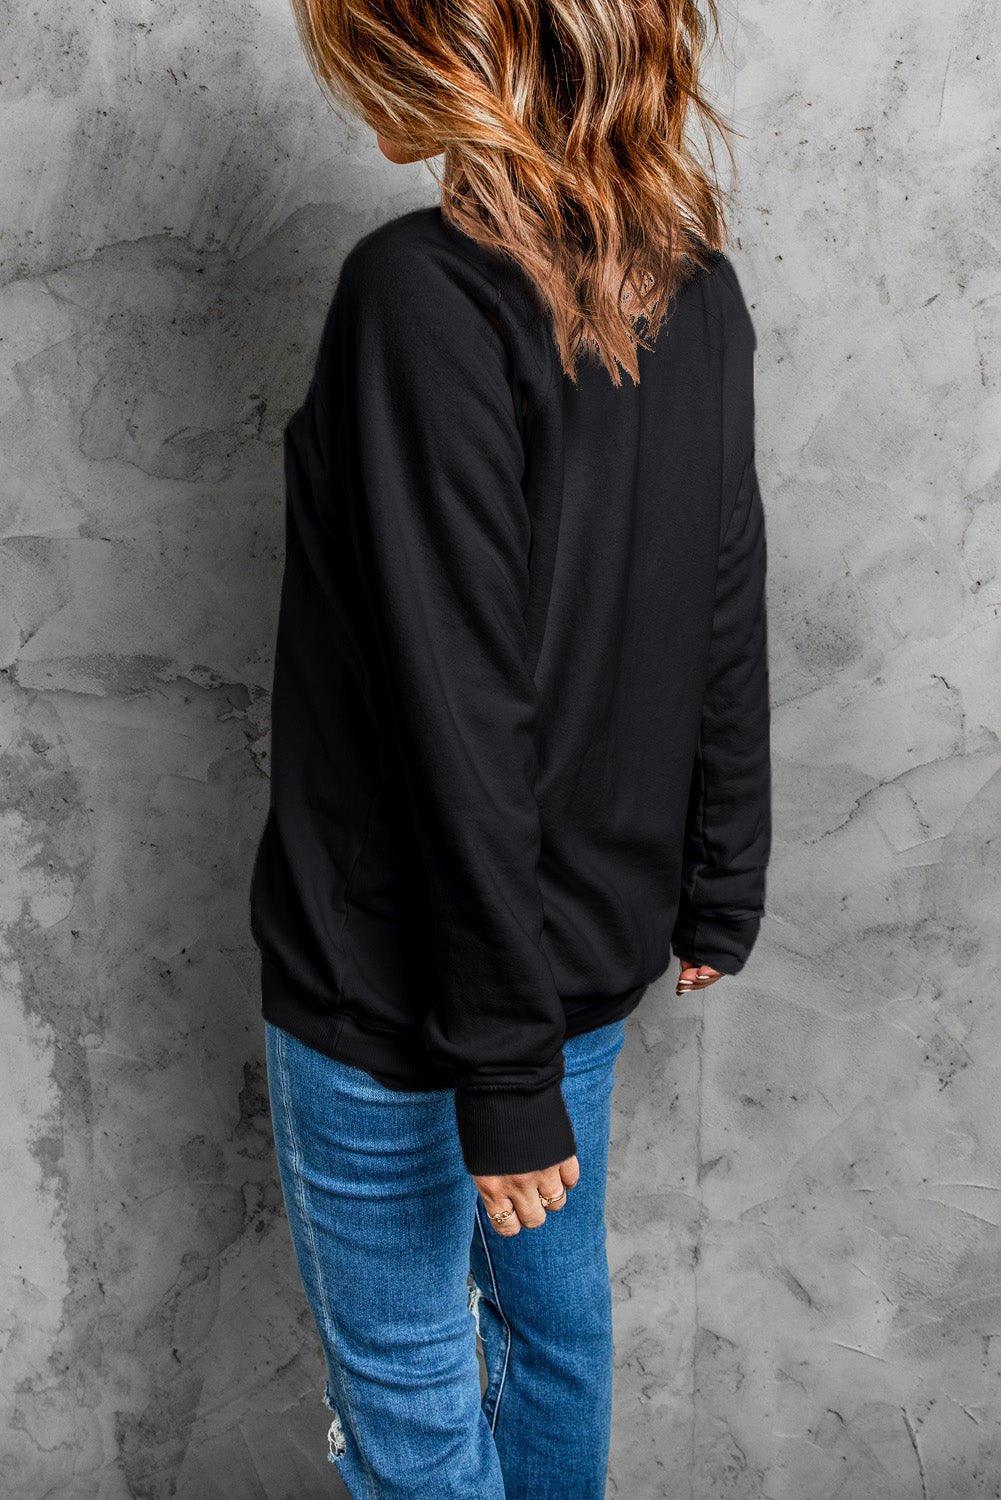 Sparkle Happy New Year Black Graphic Sweatshirt - Klazzi Fashion Boutique